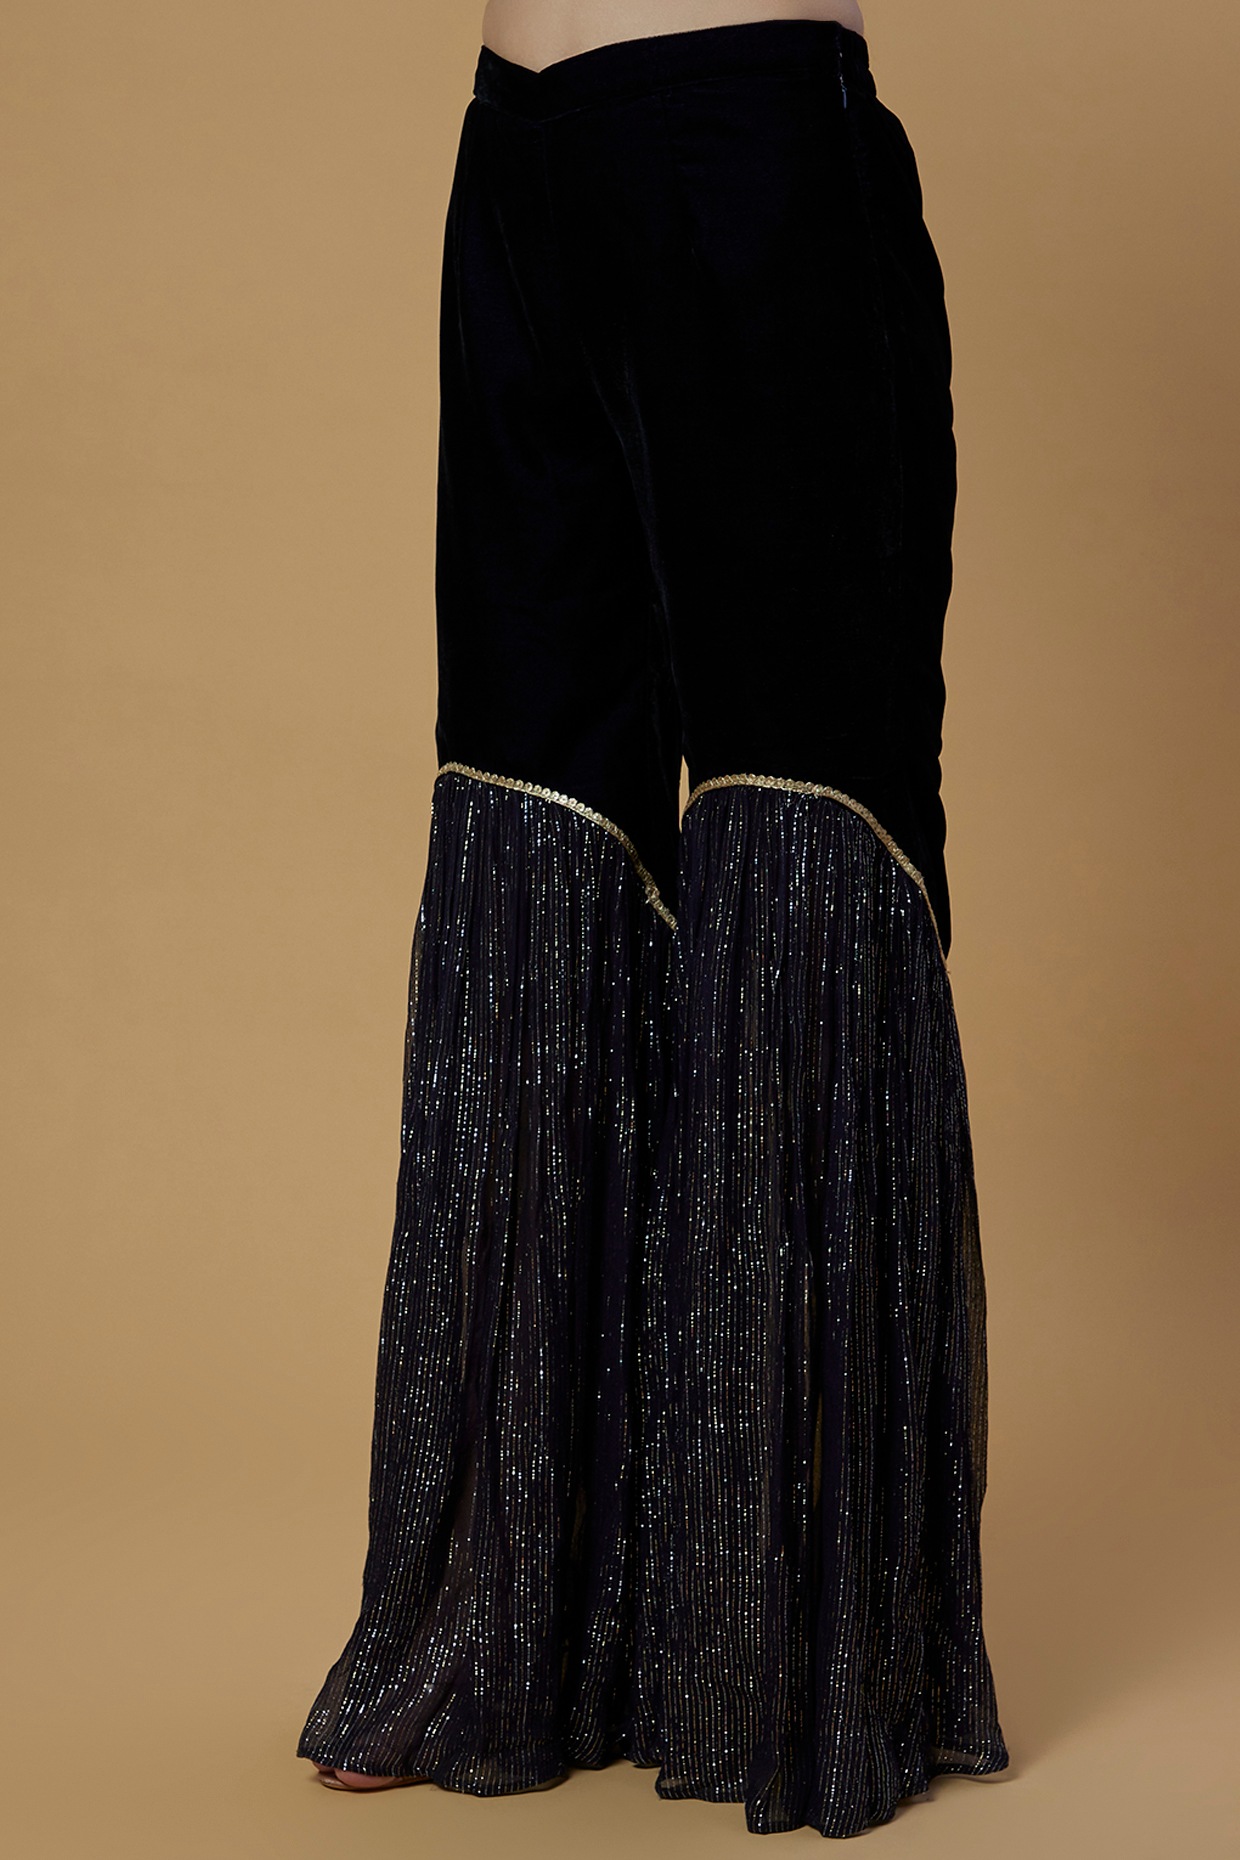 Calendula Georgette Embroidery Work Designer Heavy Salwar-Kameez Suit With Sharara  Pants | Exotic India Art